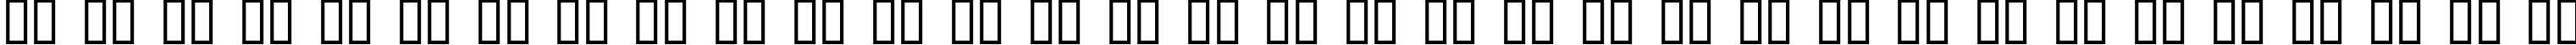 Пример написания русского алфавита шрифтом Watertown Alternate